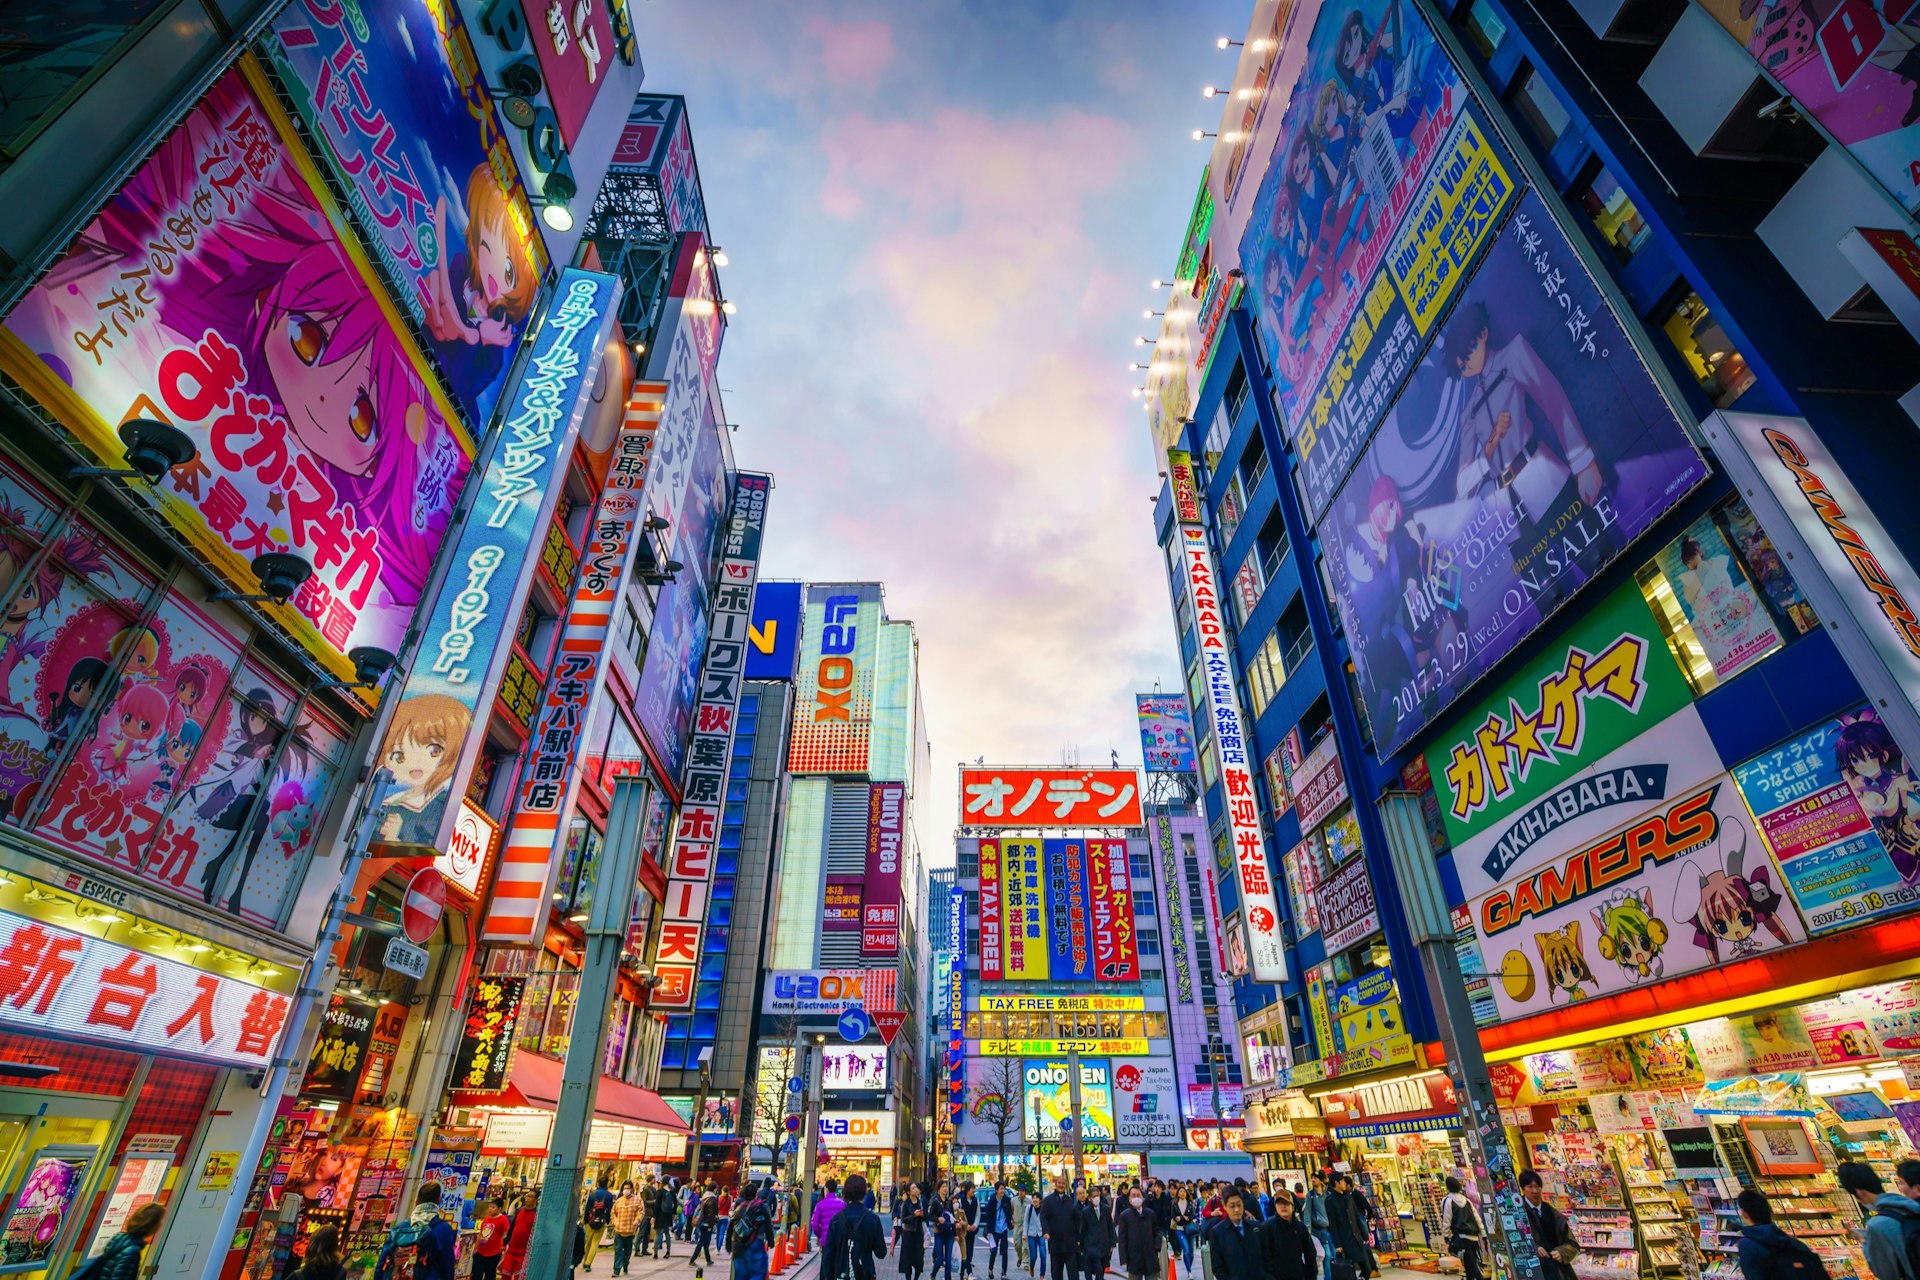 Neon signs and billboards in Akihabara at twilight